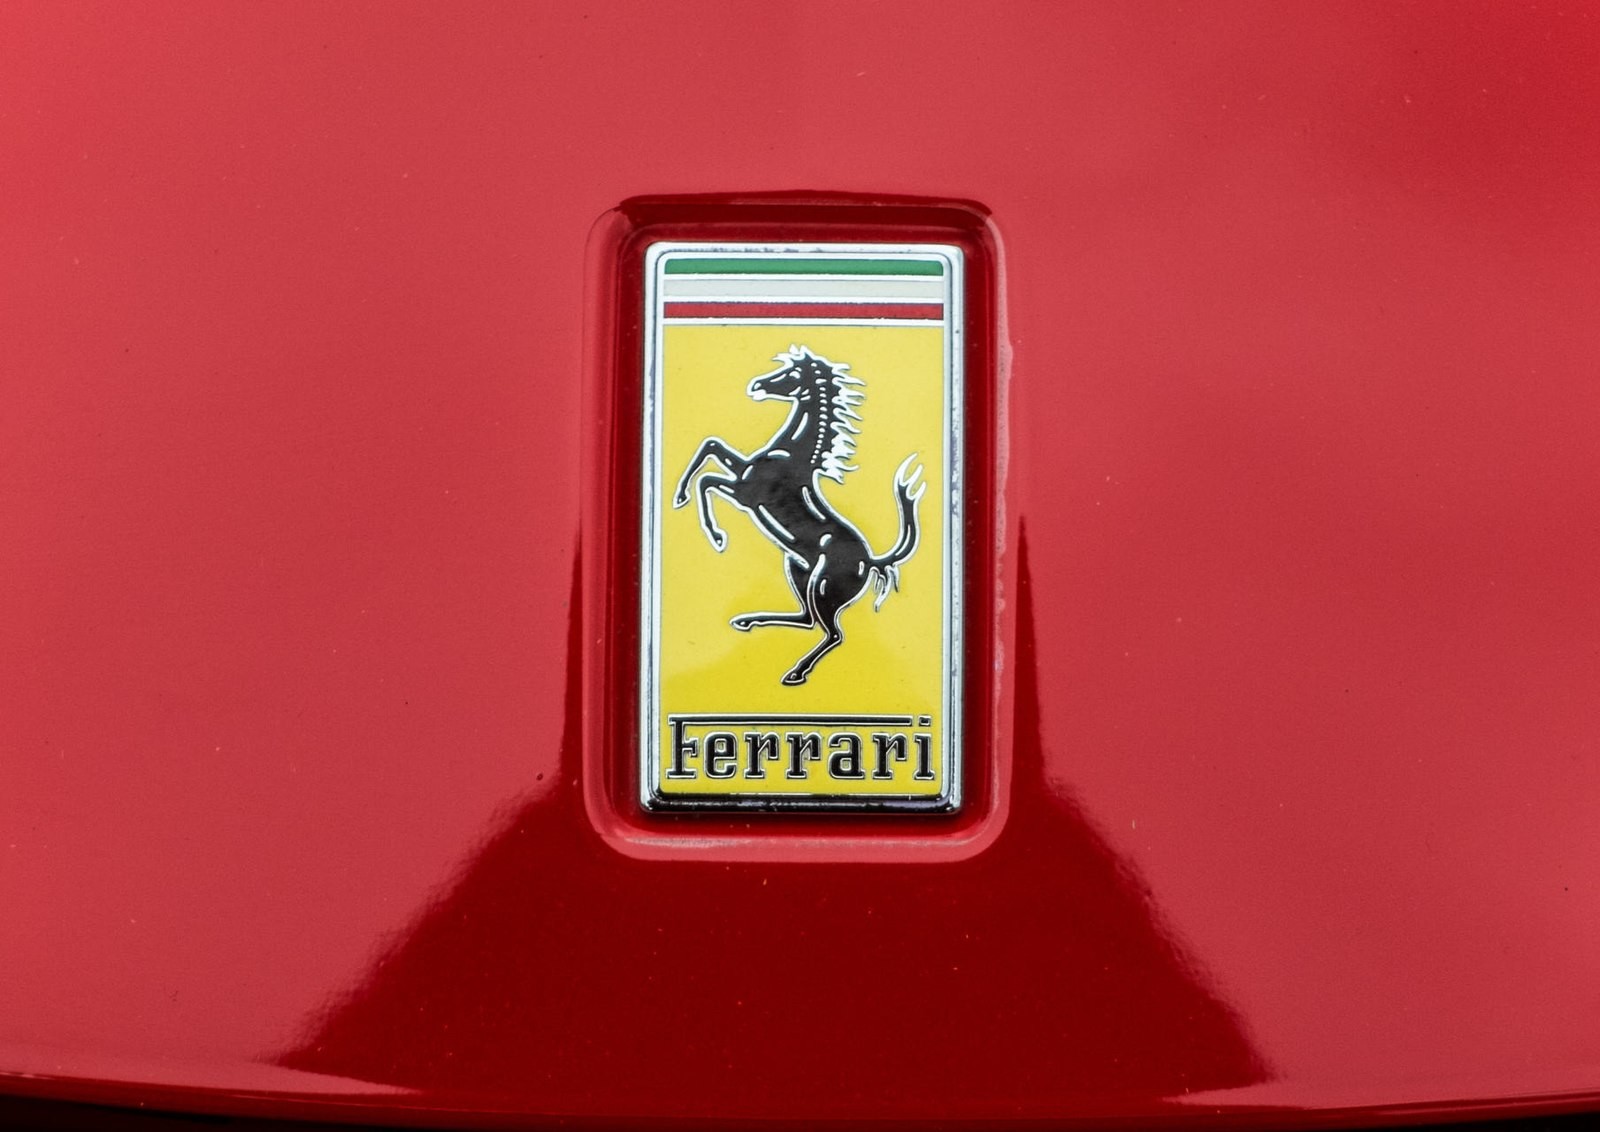 Ferrari Announces a Data Breach that Potentially Exposed Customer's Private Information